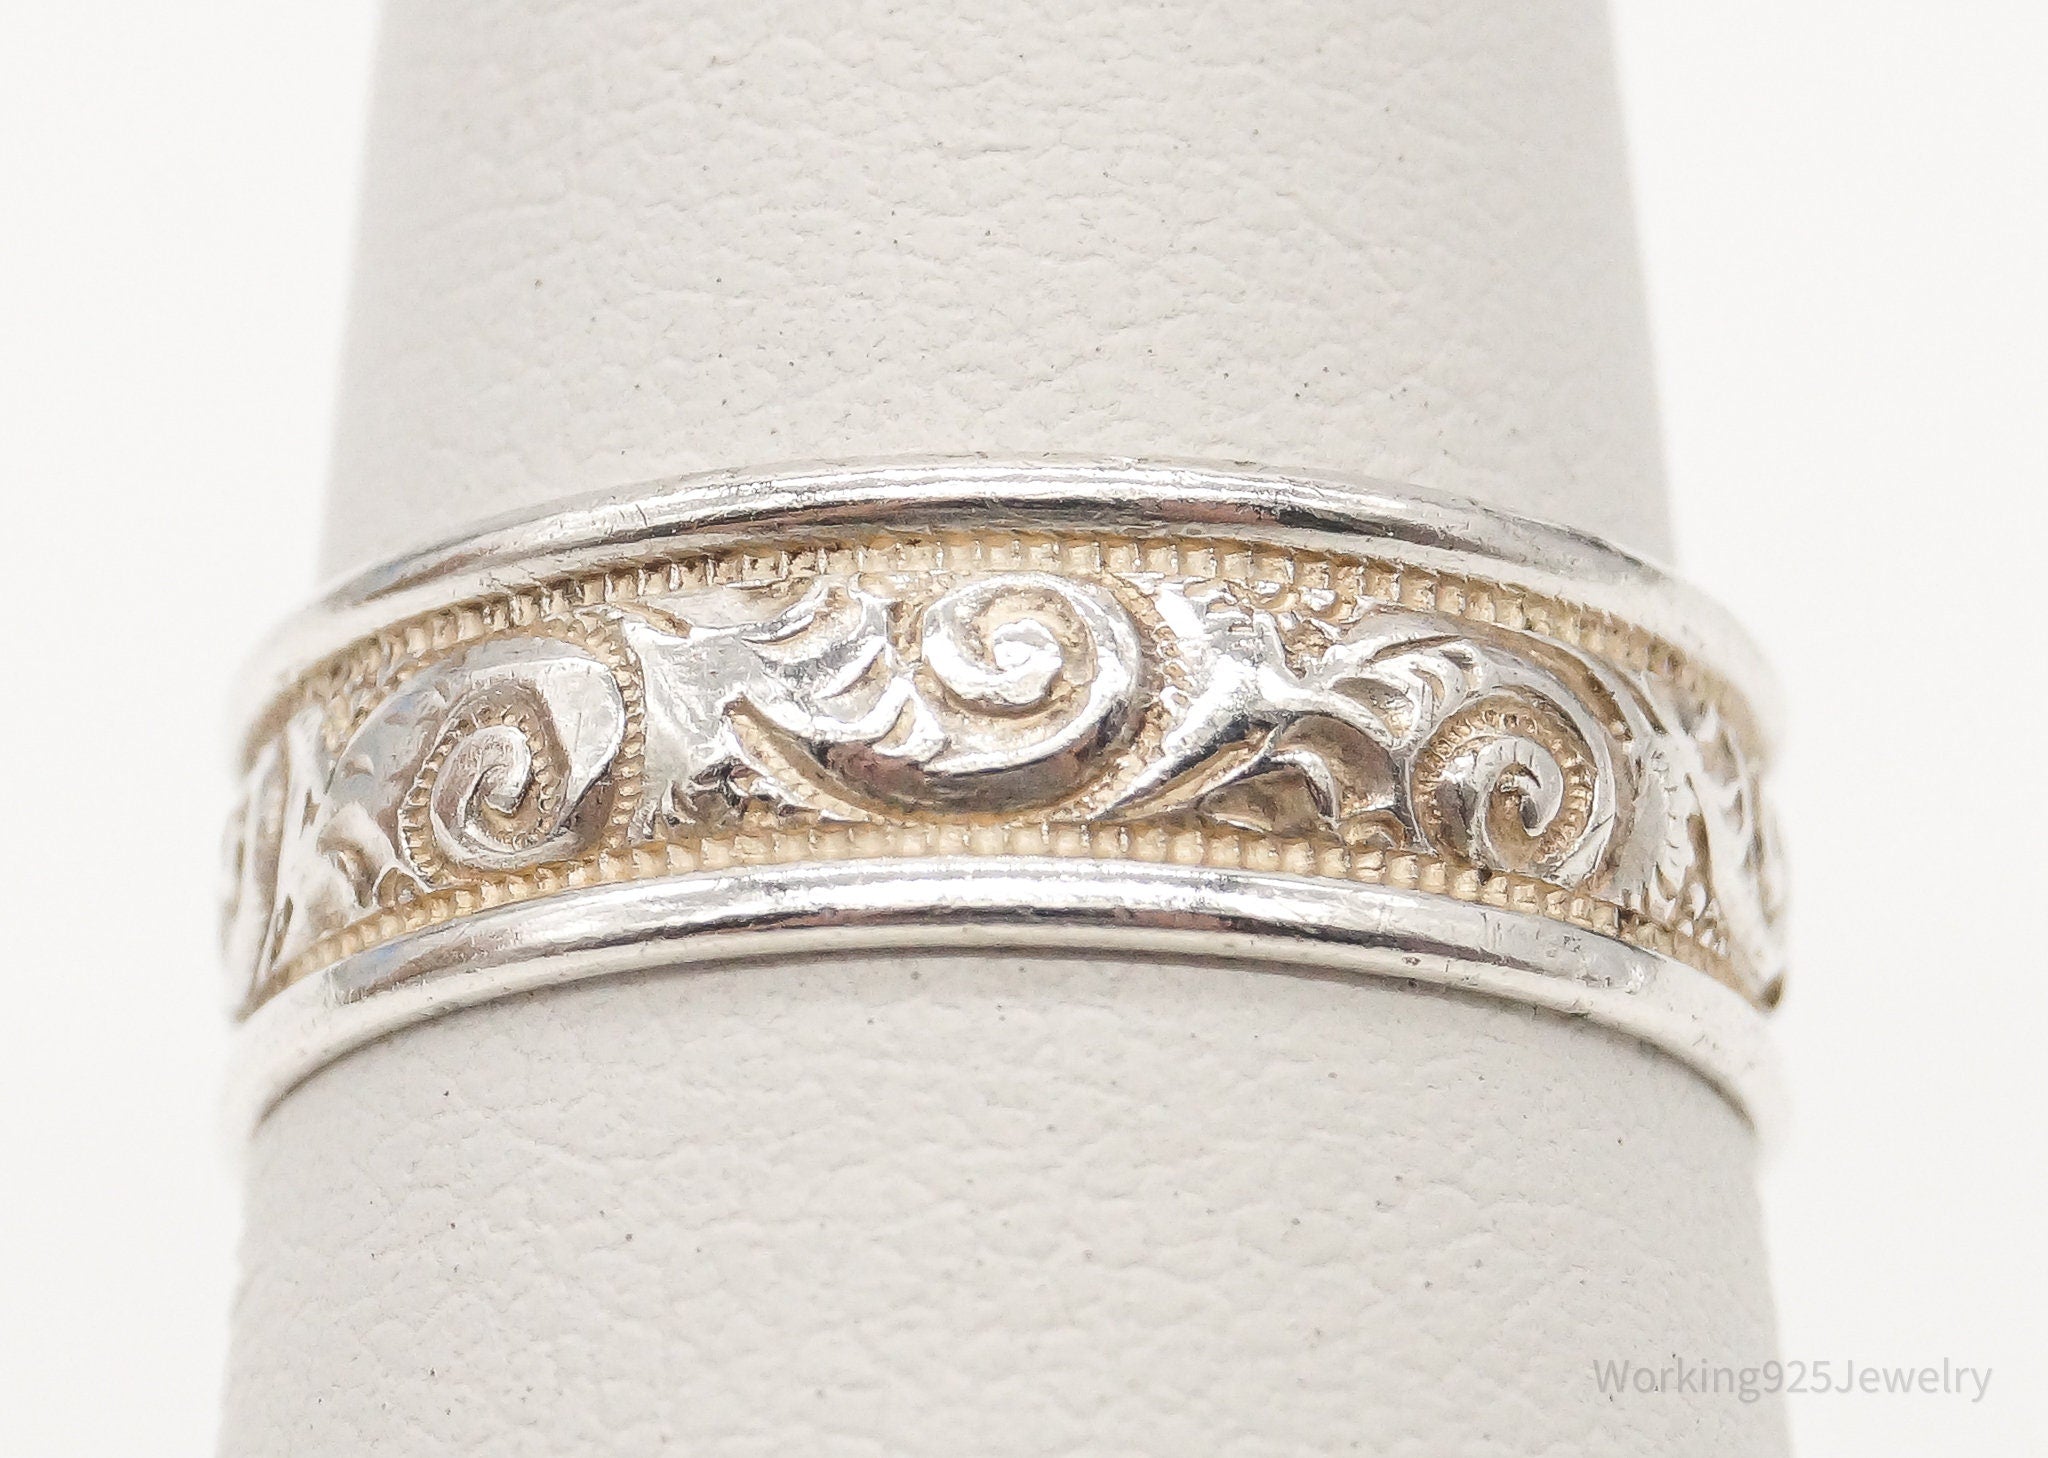 Antique Art Nouveau Sterling Silver Band Ring - Size 5.75